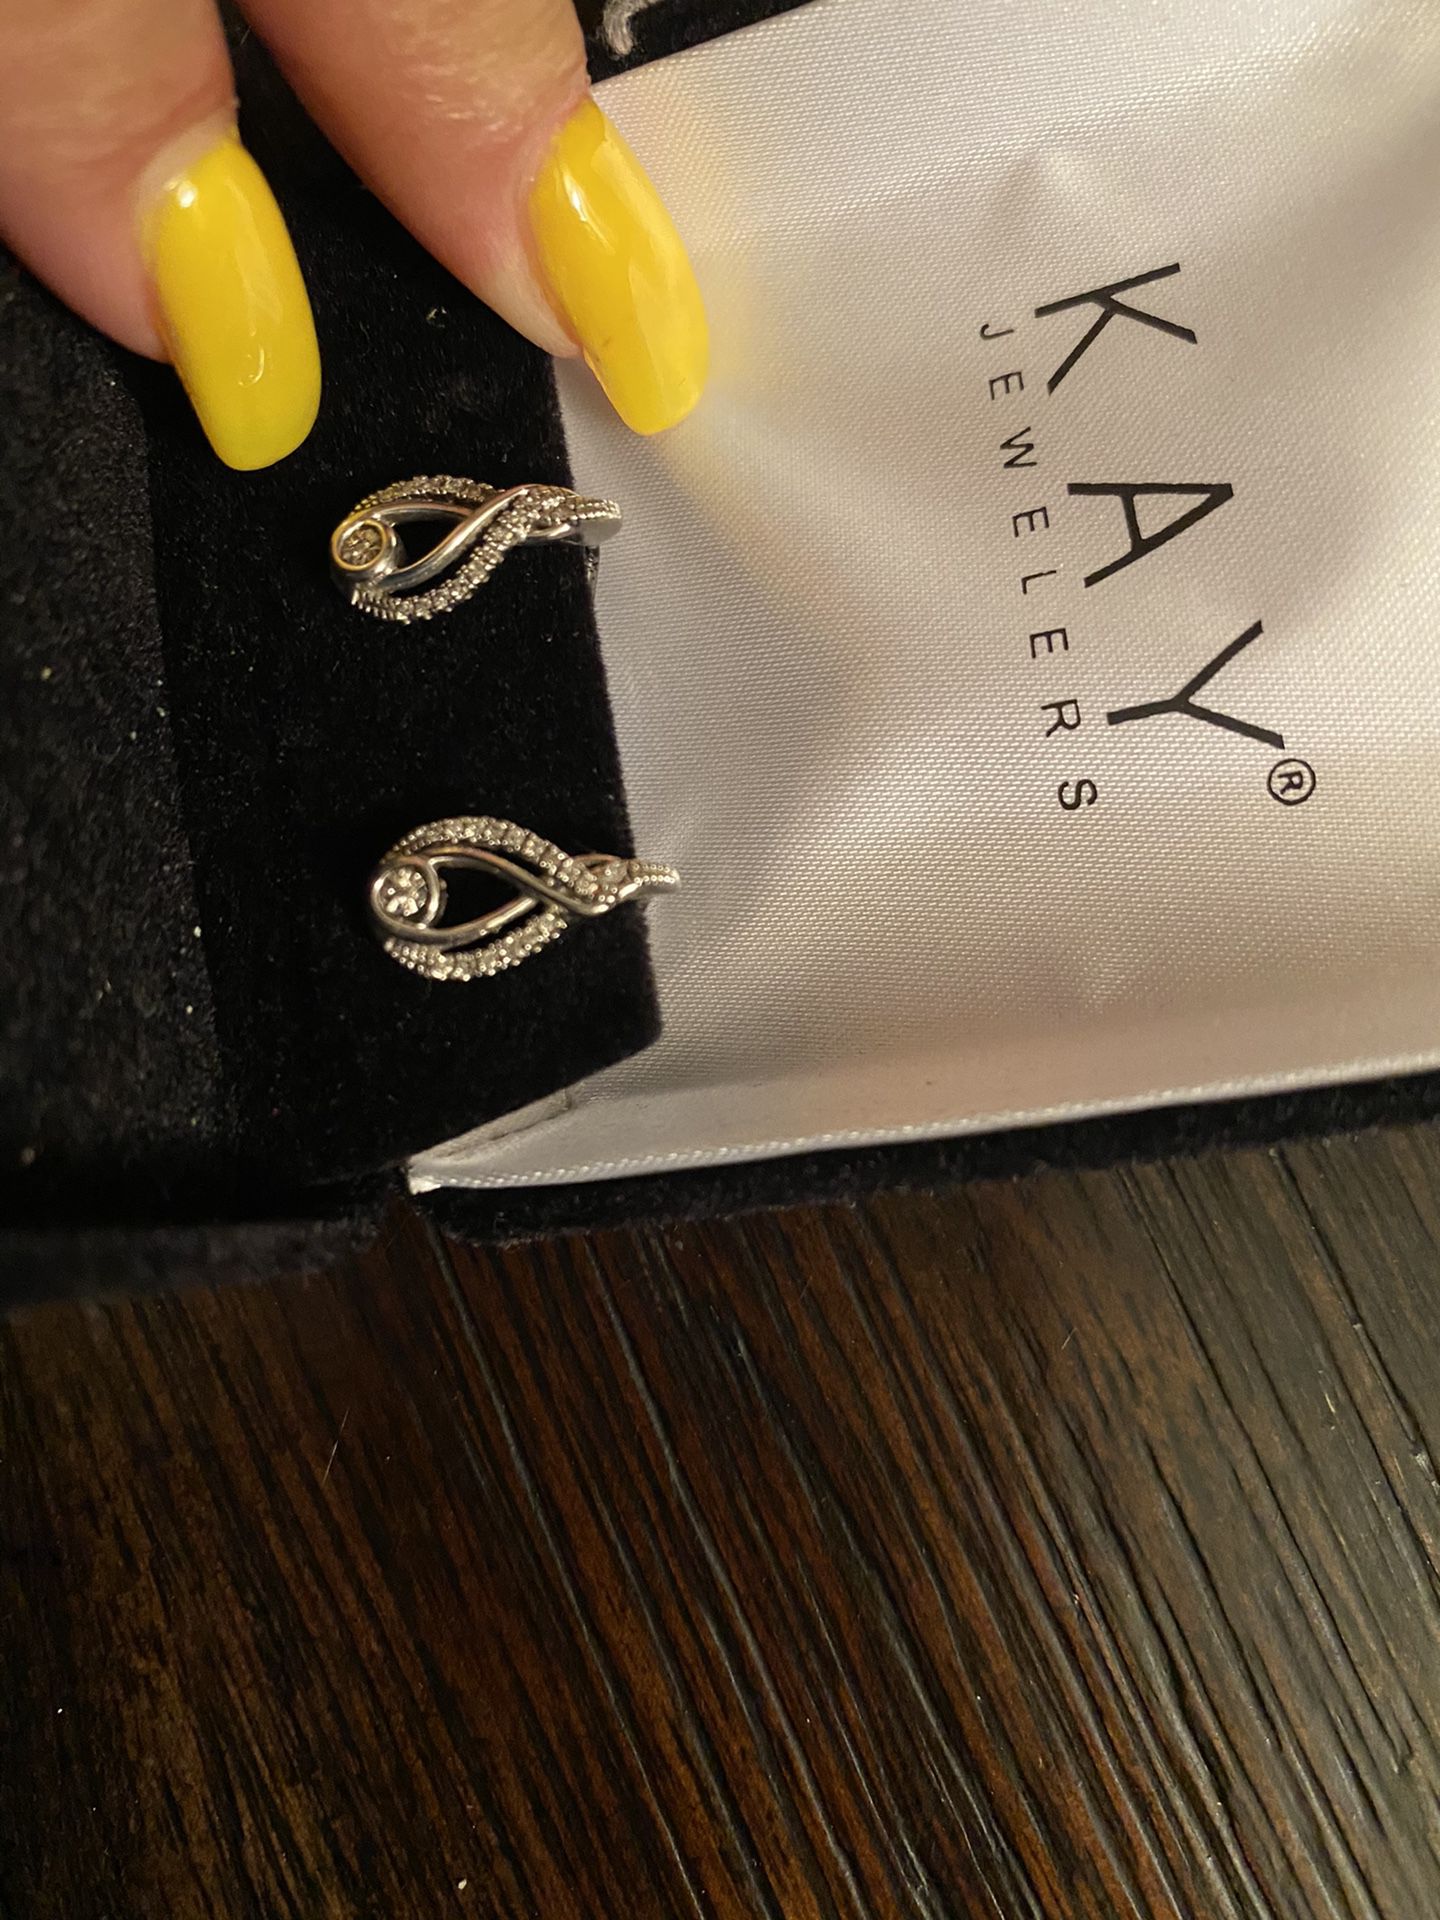 Diamond earrings from Kay